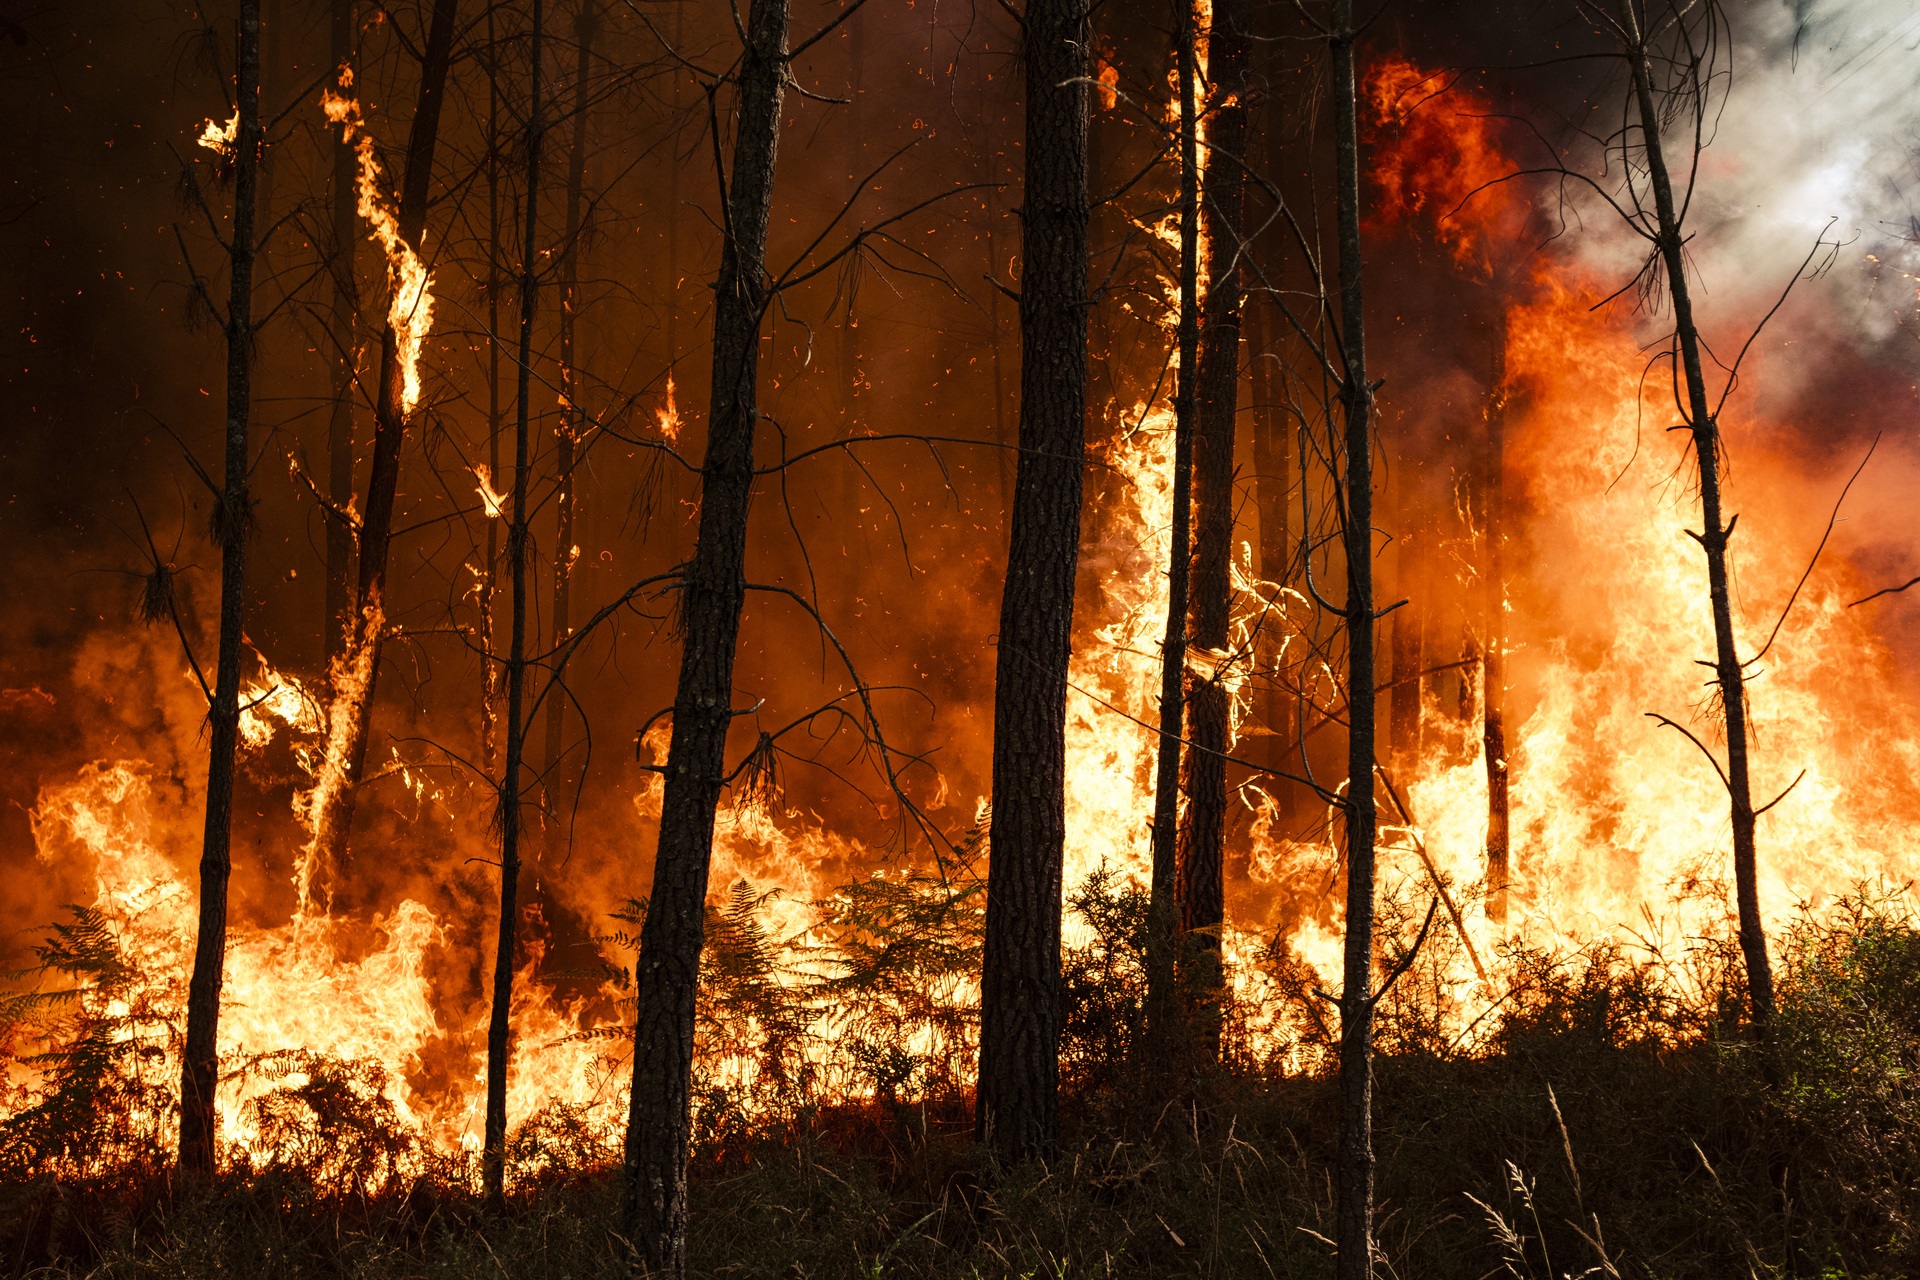 Medium shot of a burning forest.